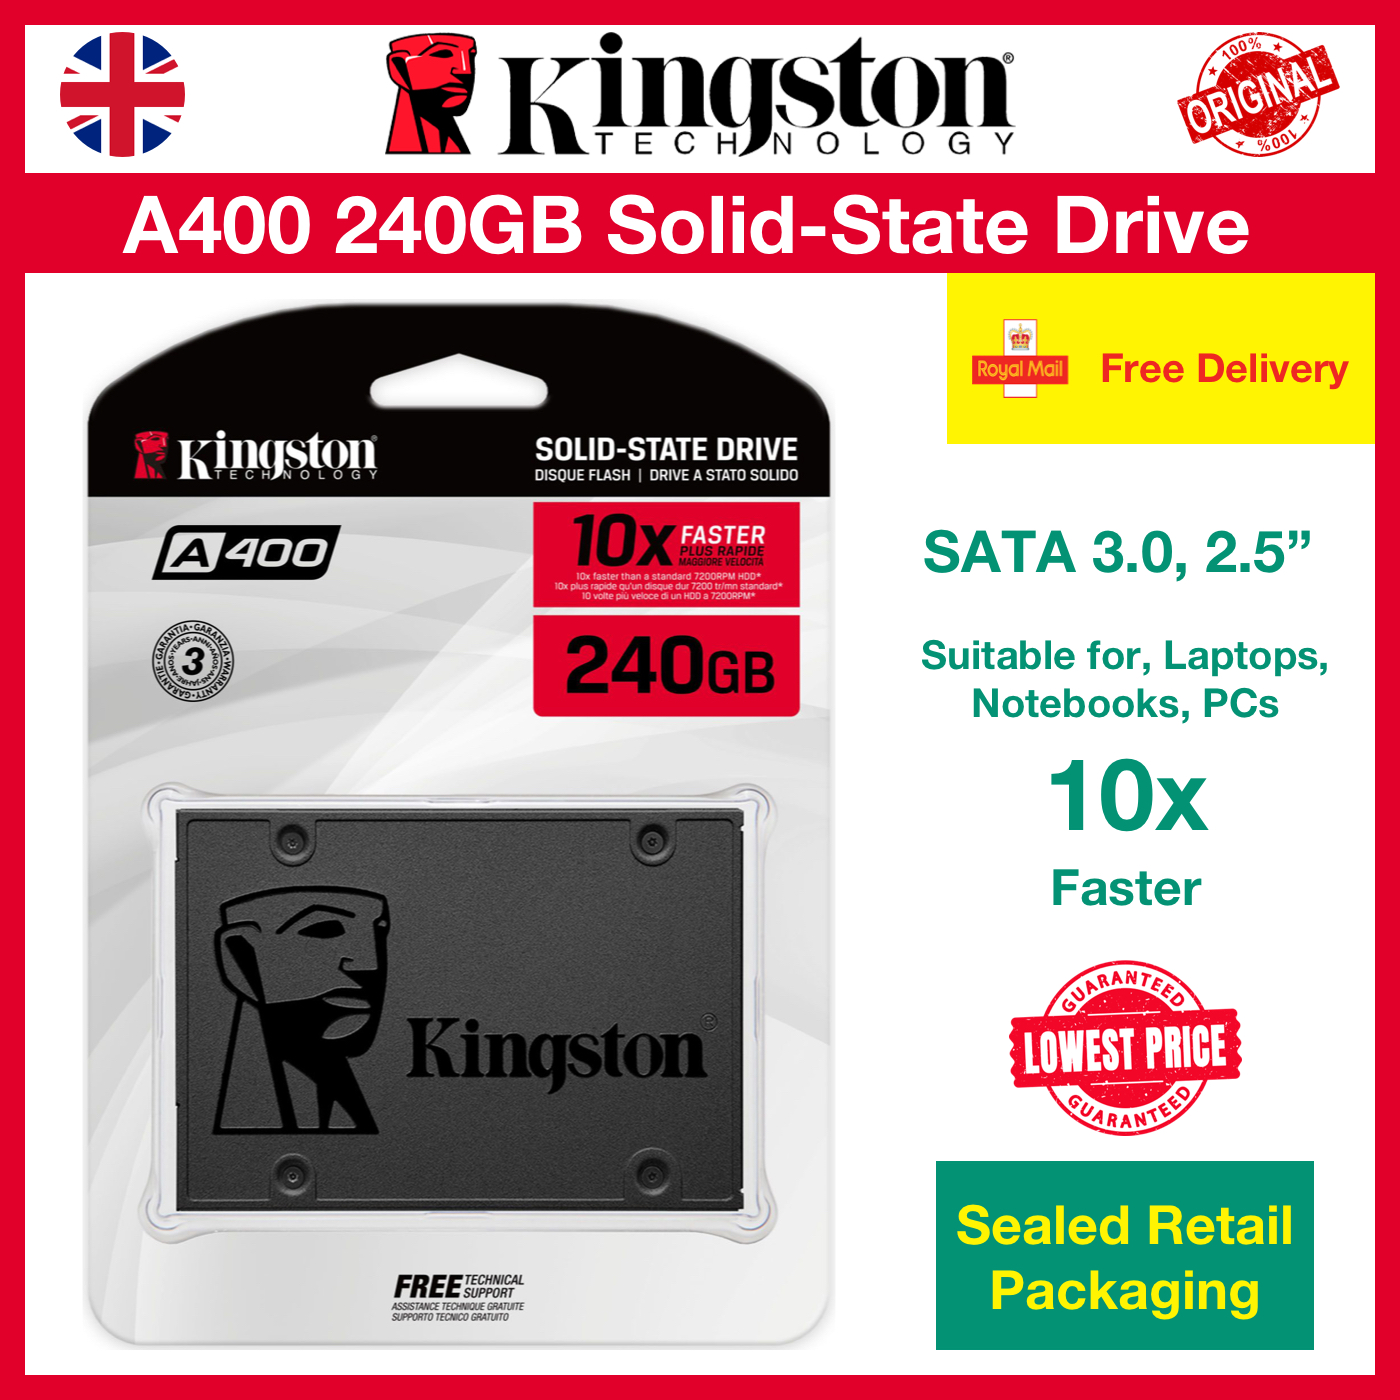 A400 240GB SSD 2.5" Shop Moksha Lowest Price